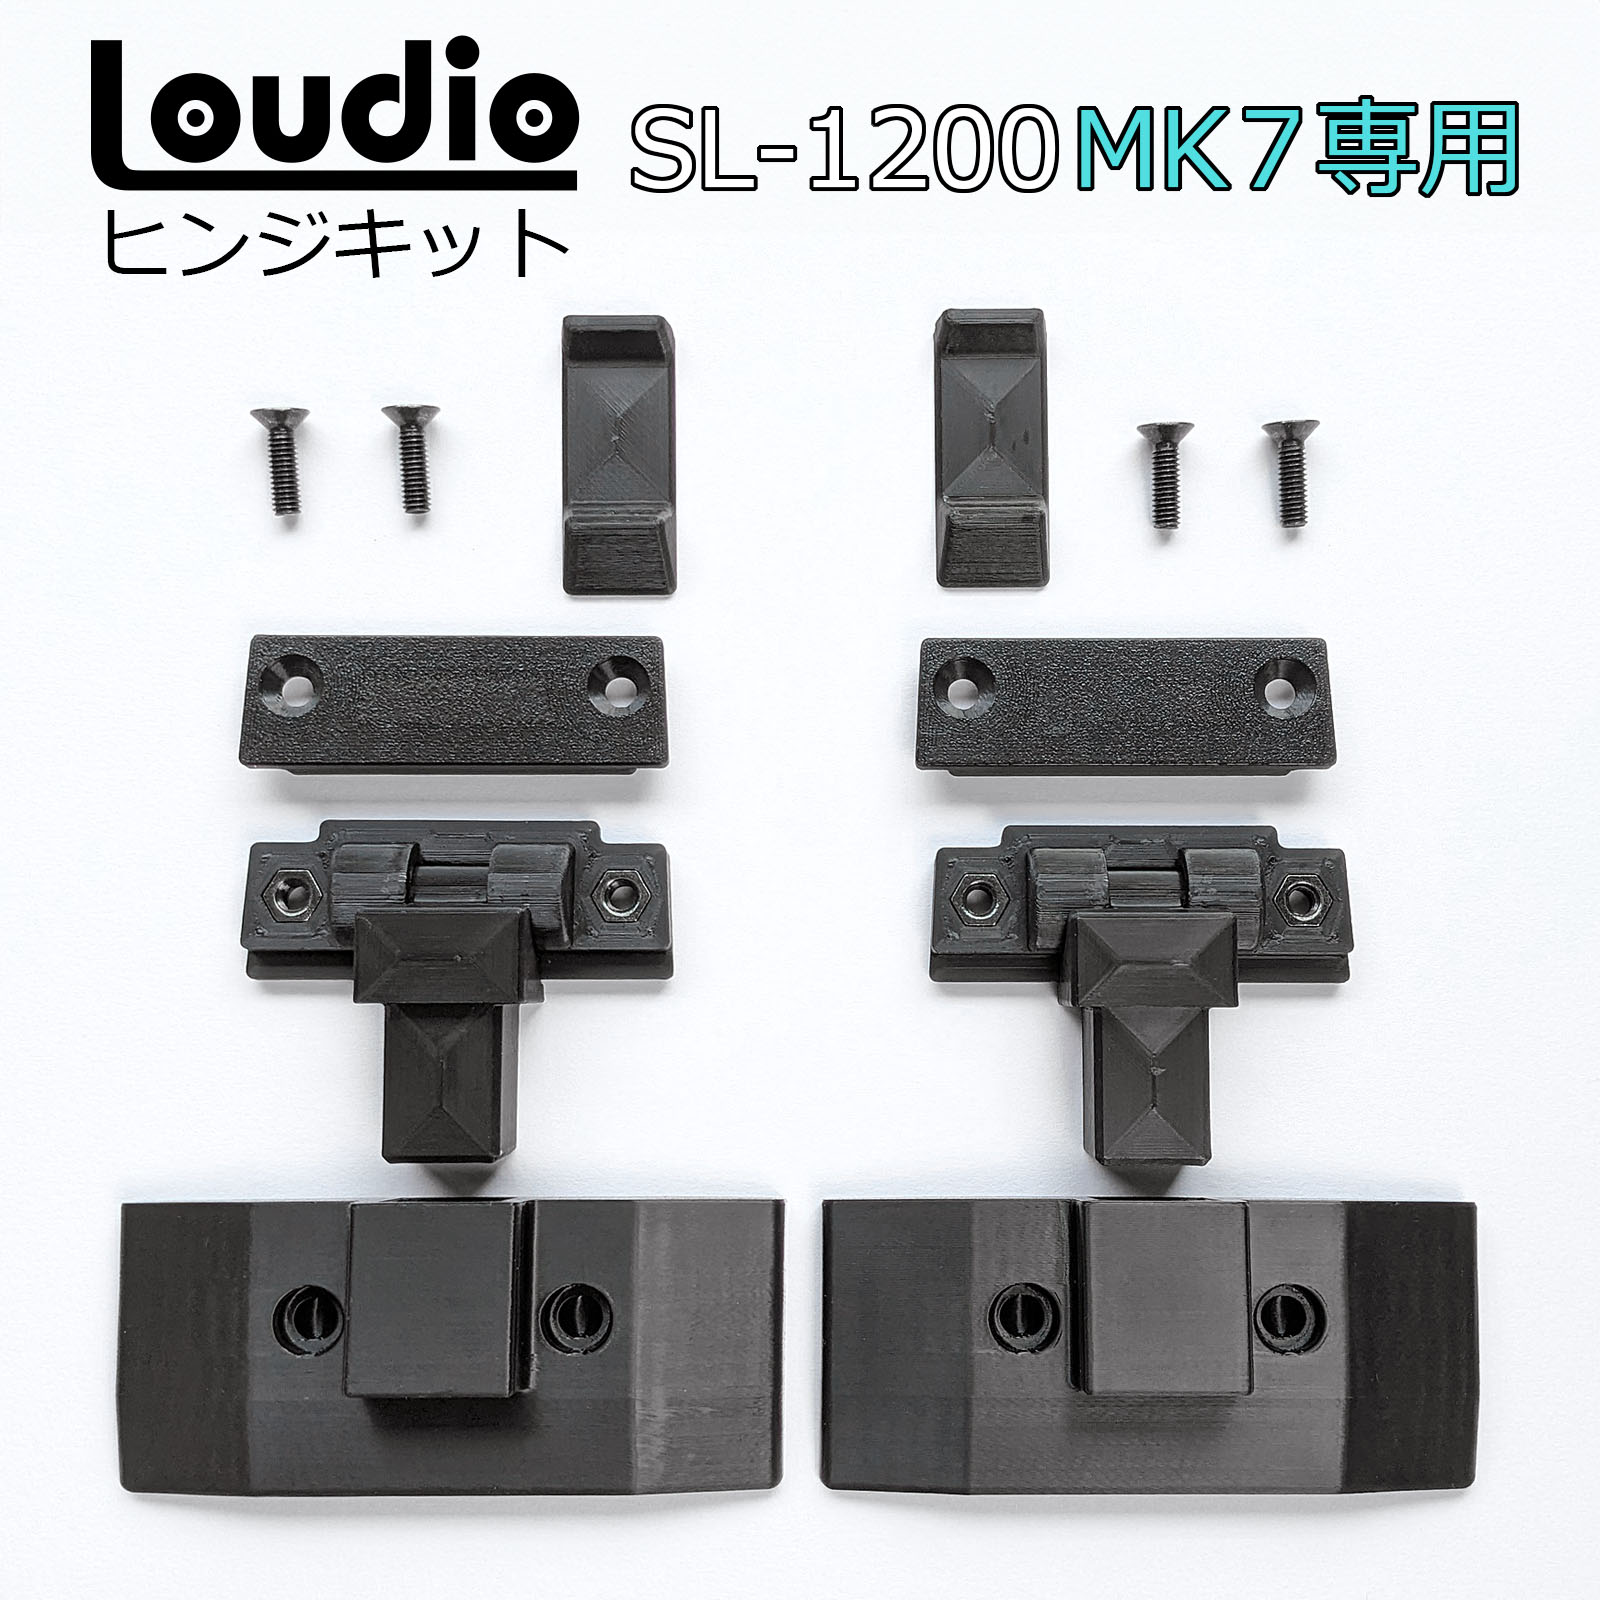 MK7 exclusive use *Loudio dust cover hinge kit conform :TECHNICS SL-1200 MK7 Technics turntable analogue record player Hinge Kit